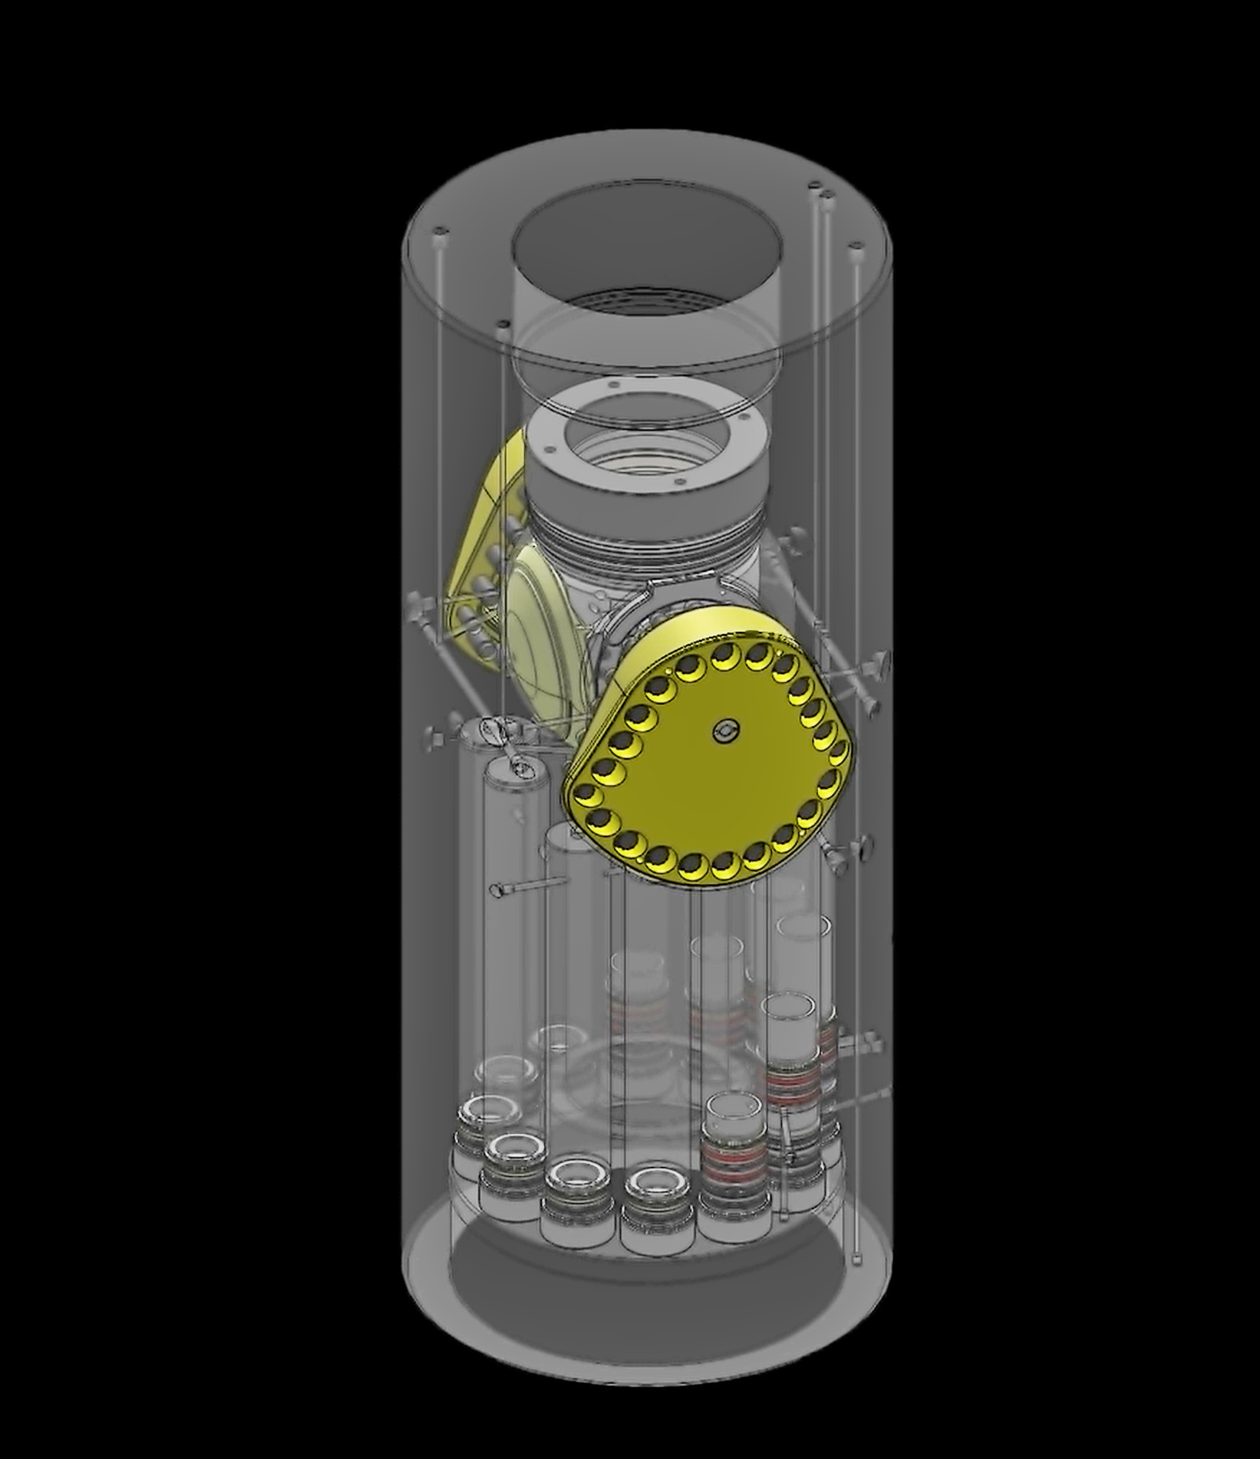 Interventek launches Revolution PowerPlus safety valve technology at Subsea Expo